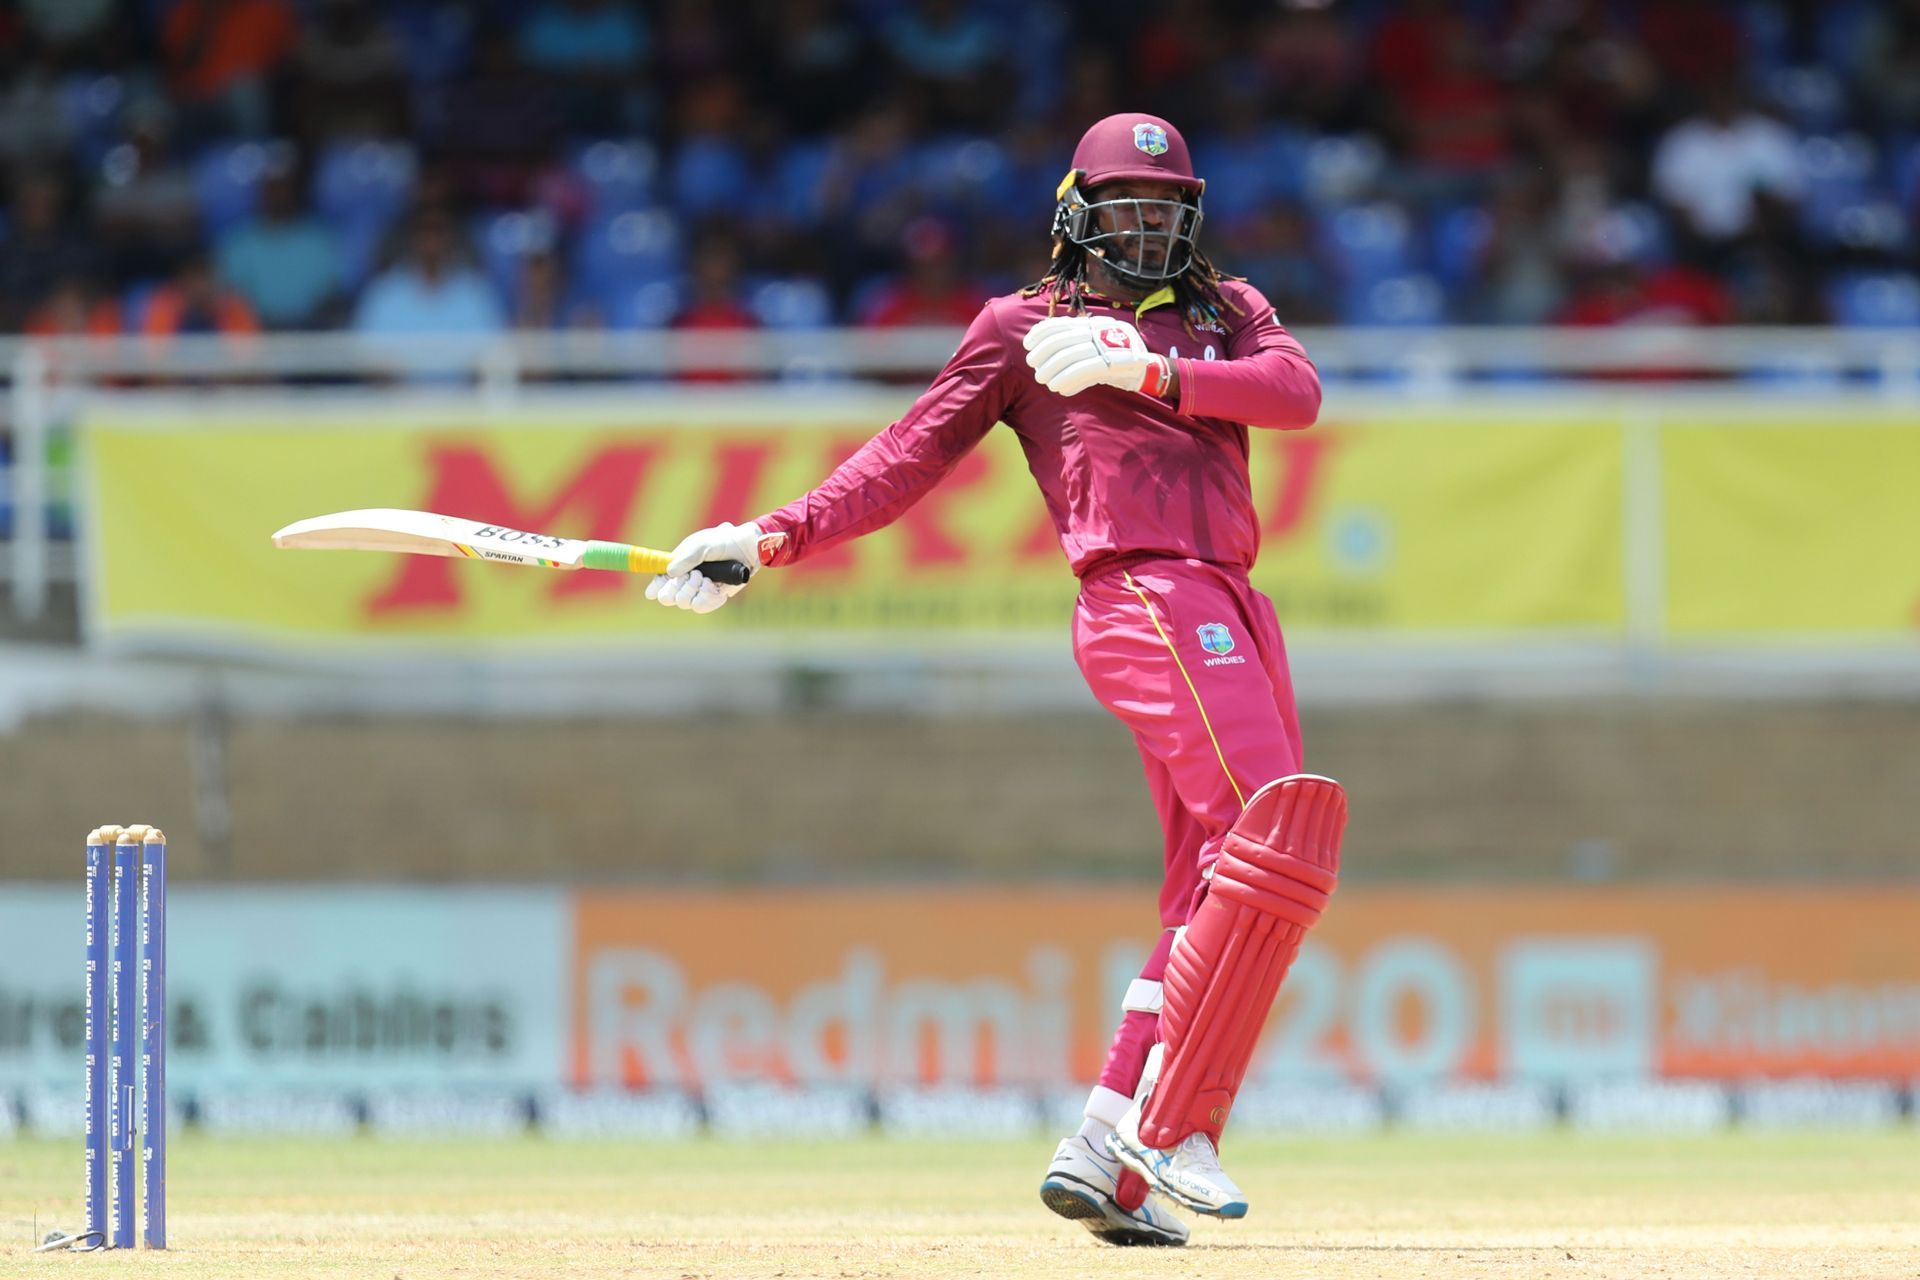 The West Indies did not field Chris Gayle against Afghanistan